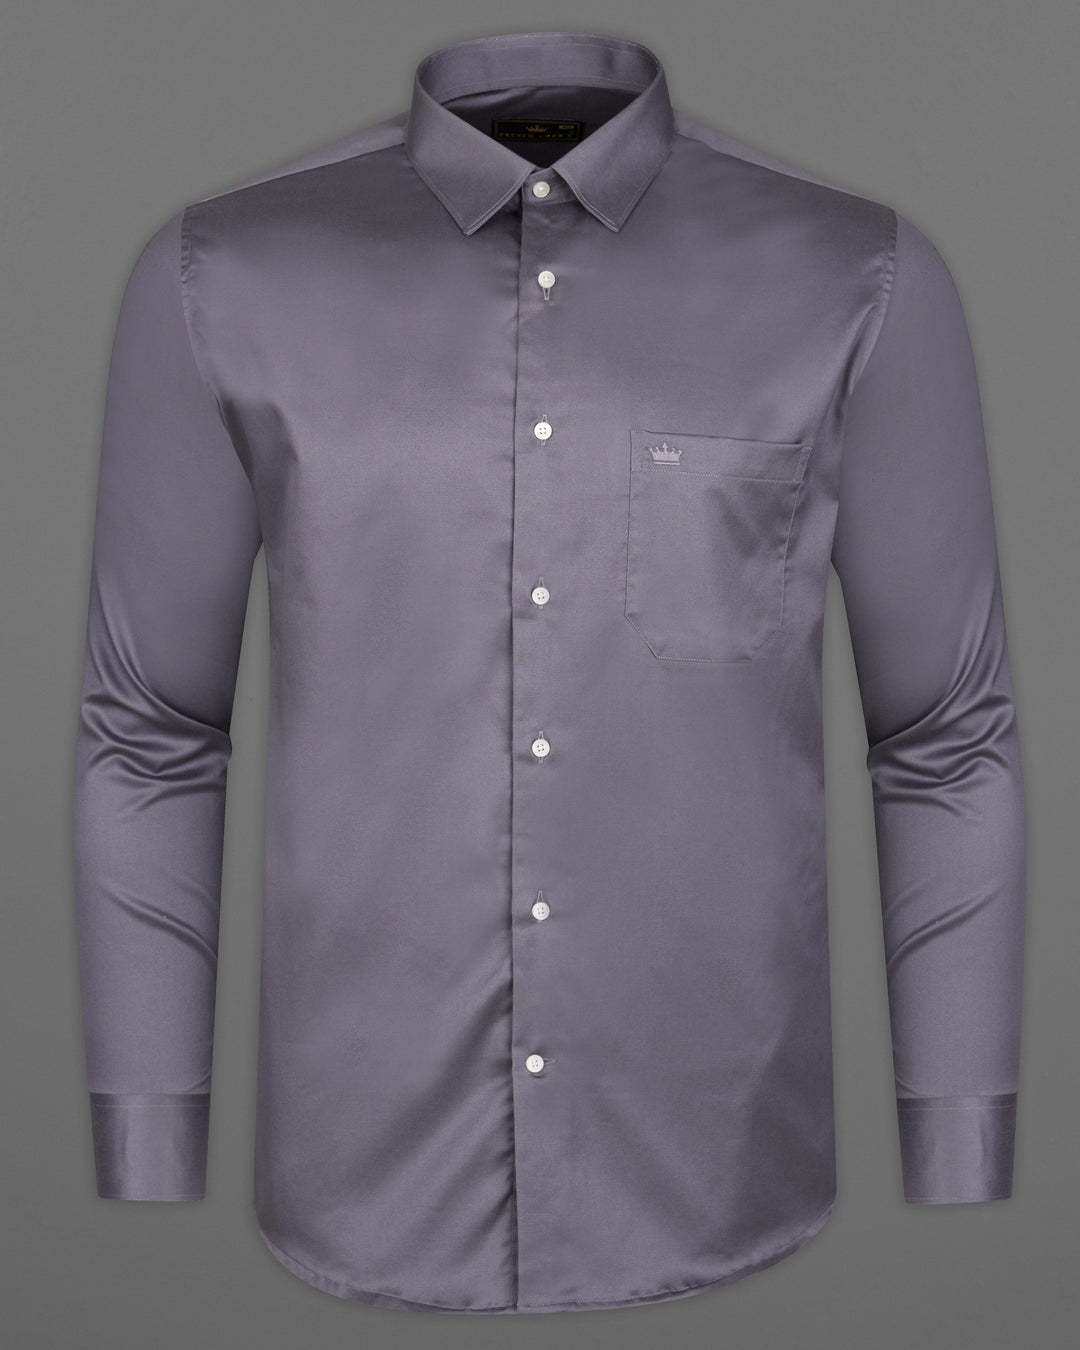 Buy Khadi Silk Men's Dark Purple Half Sleeves Formal Shirt (40) at Amazon.in